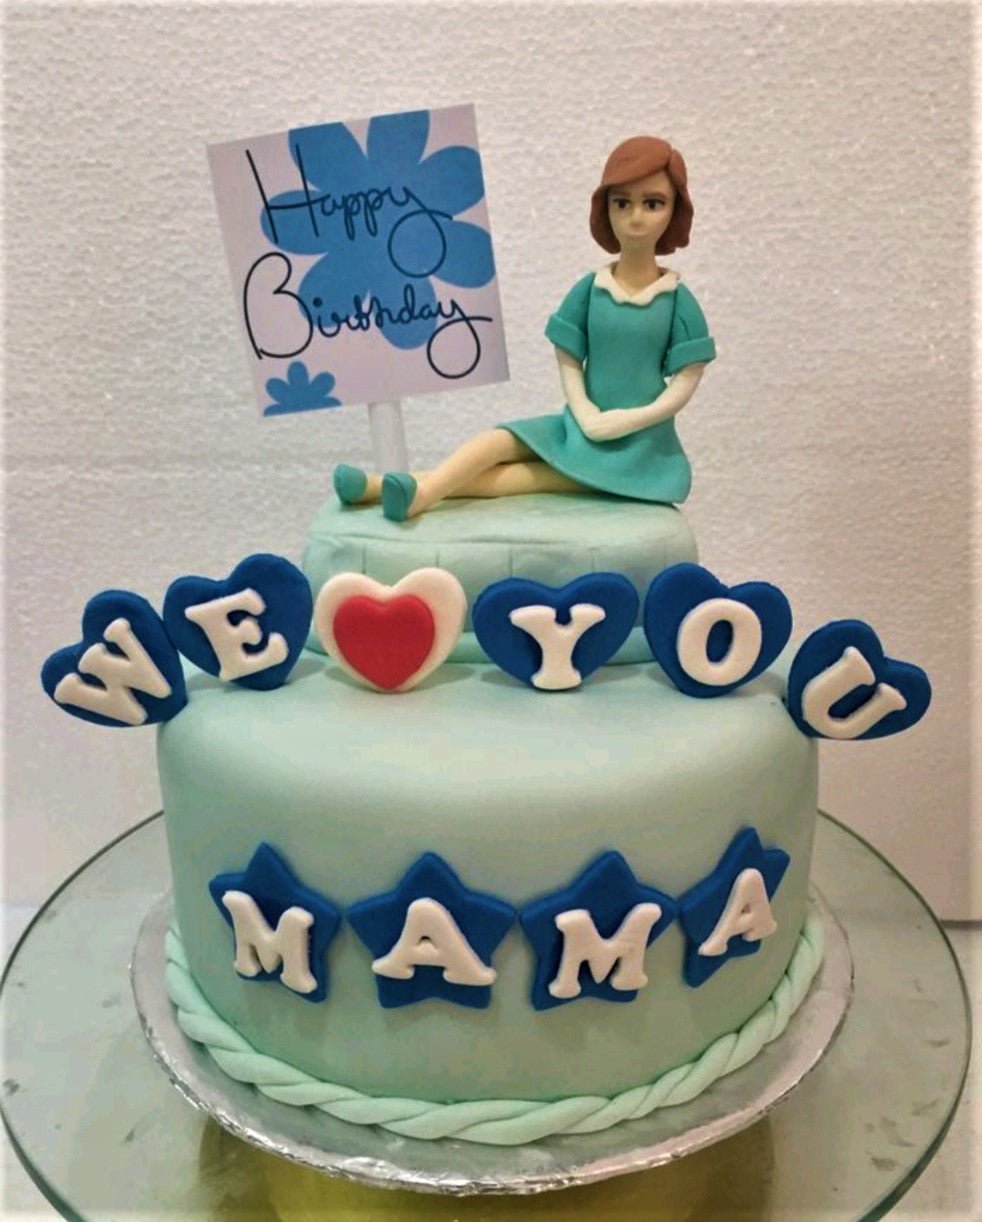 Happy Birthday to mama Cake Images